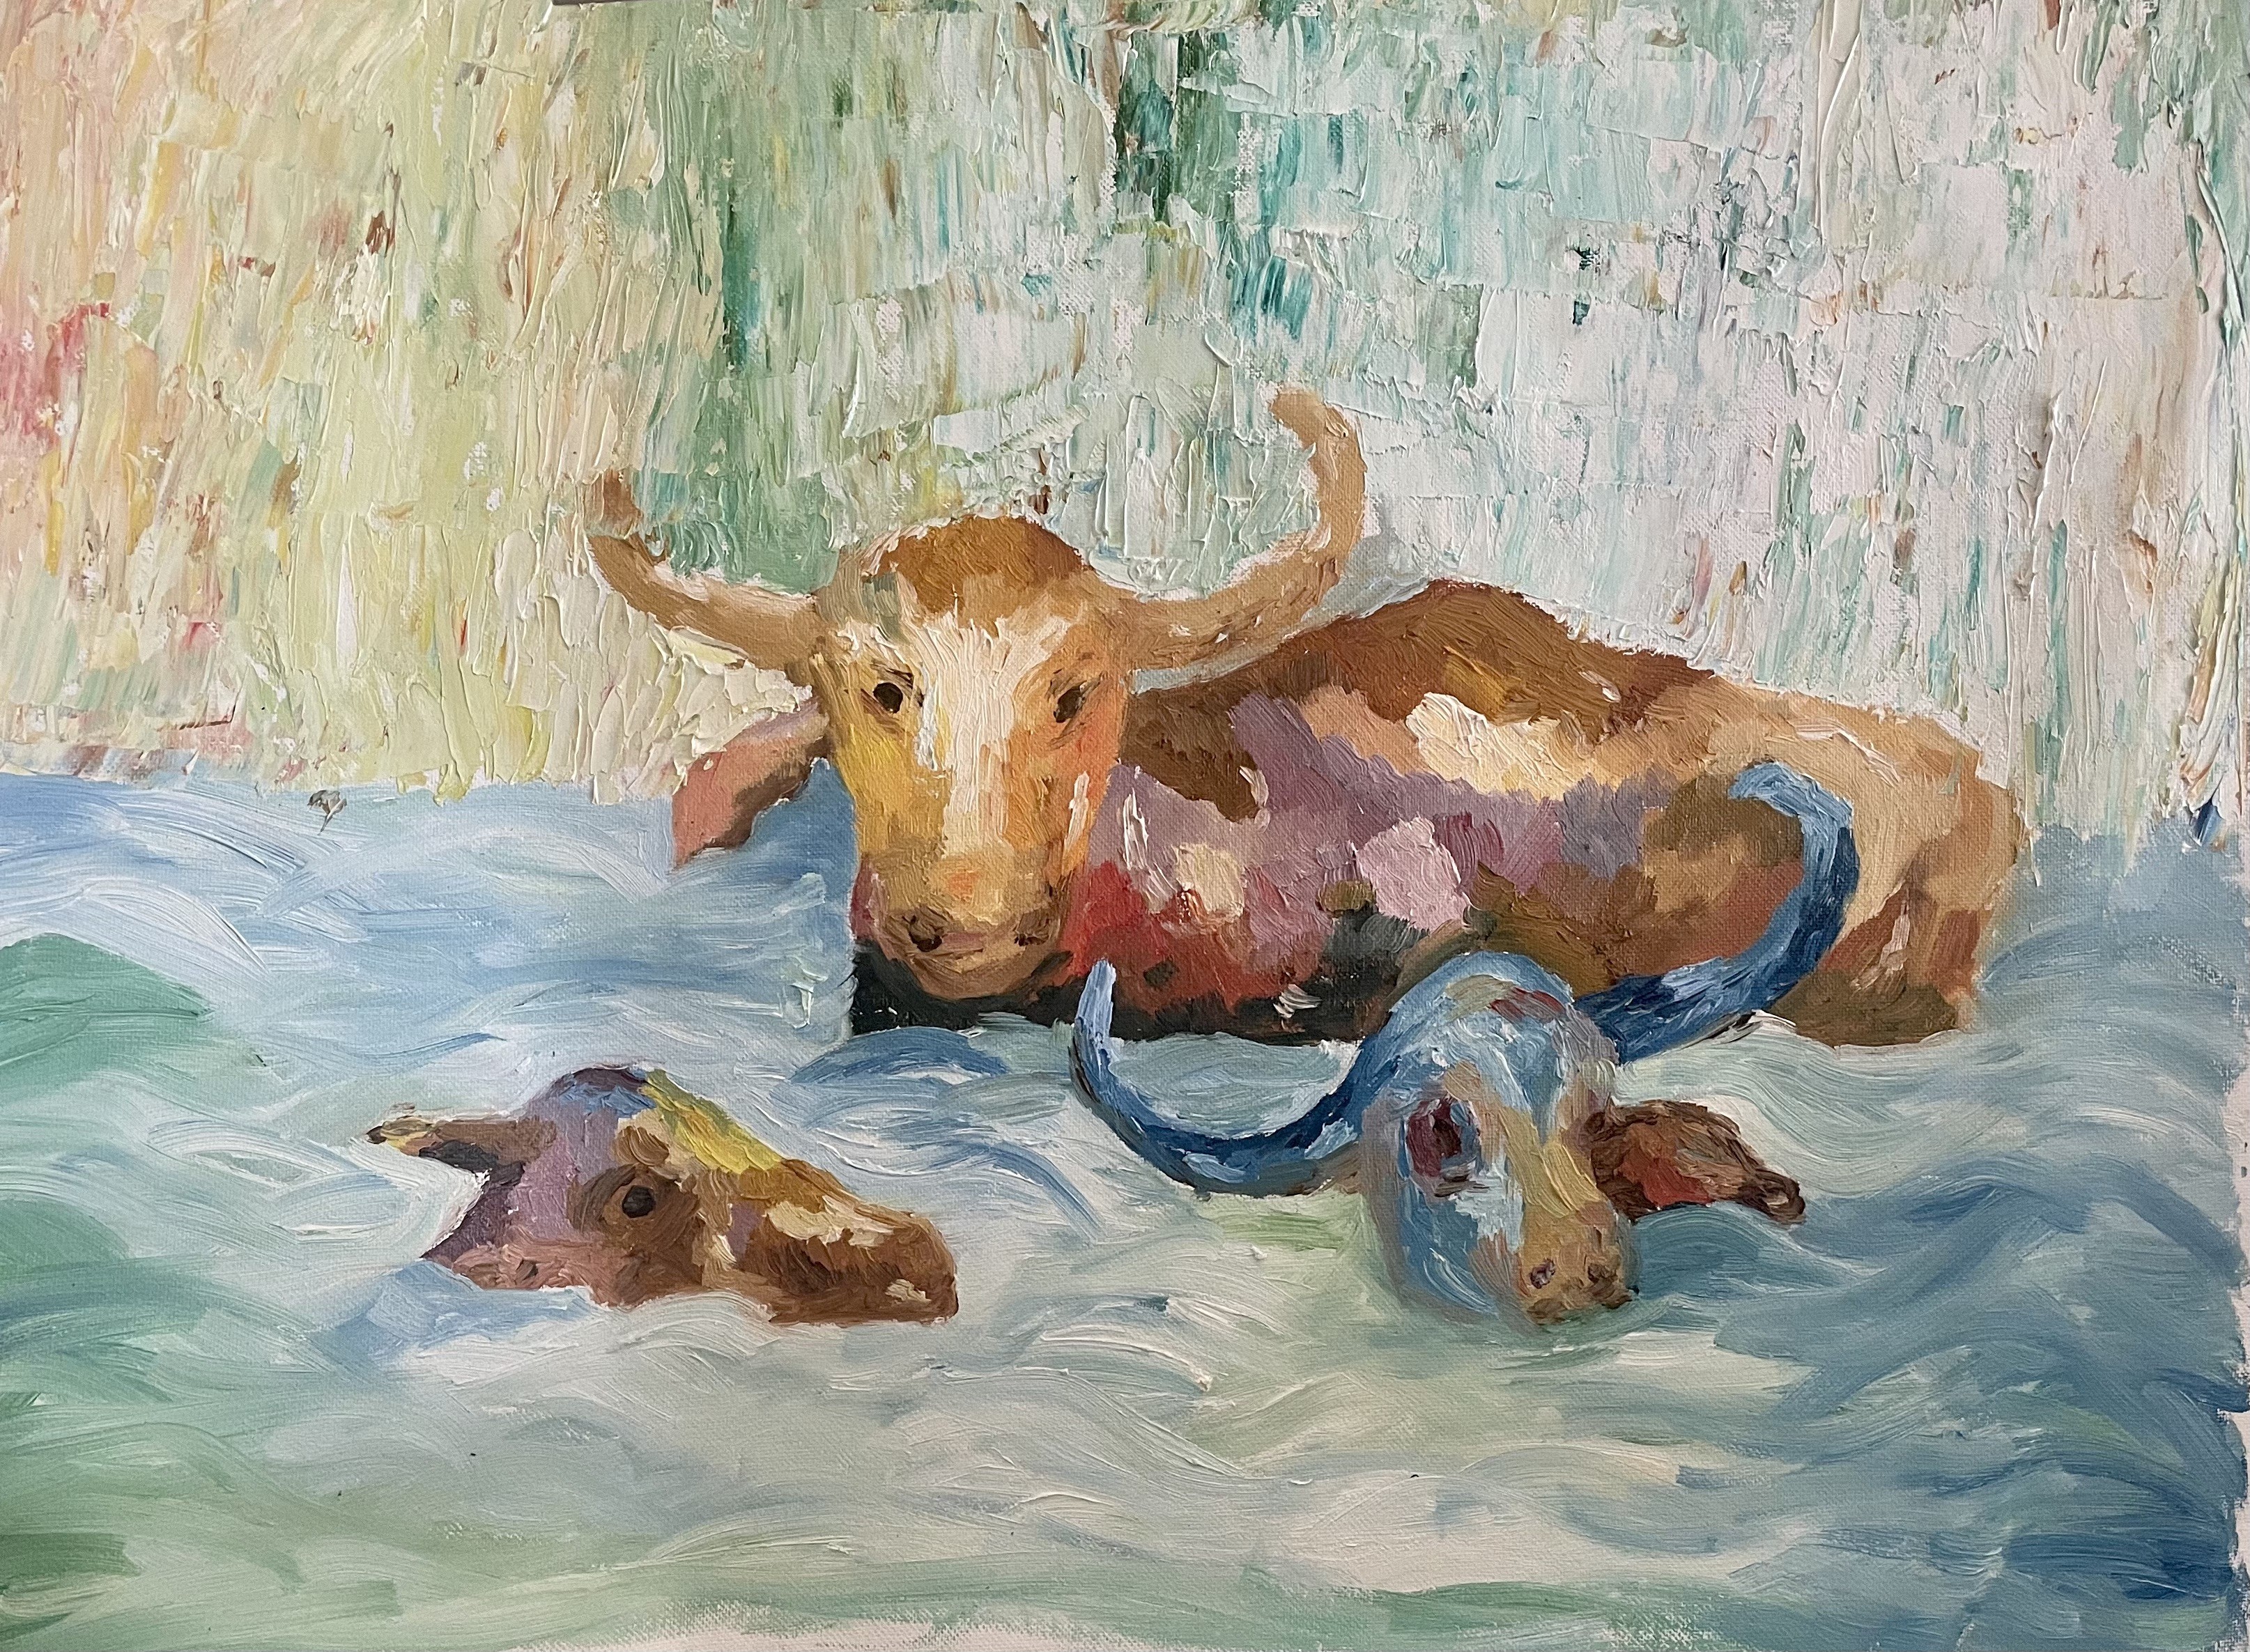 Bathing Buffalo by Ruwanthi Gunawardana